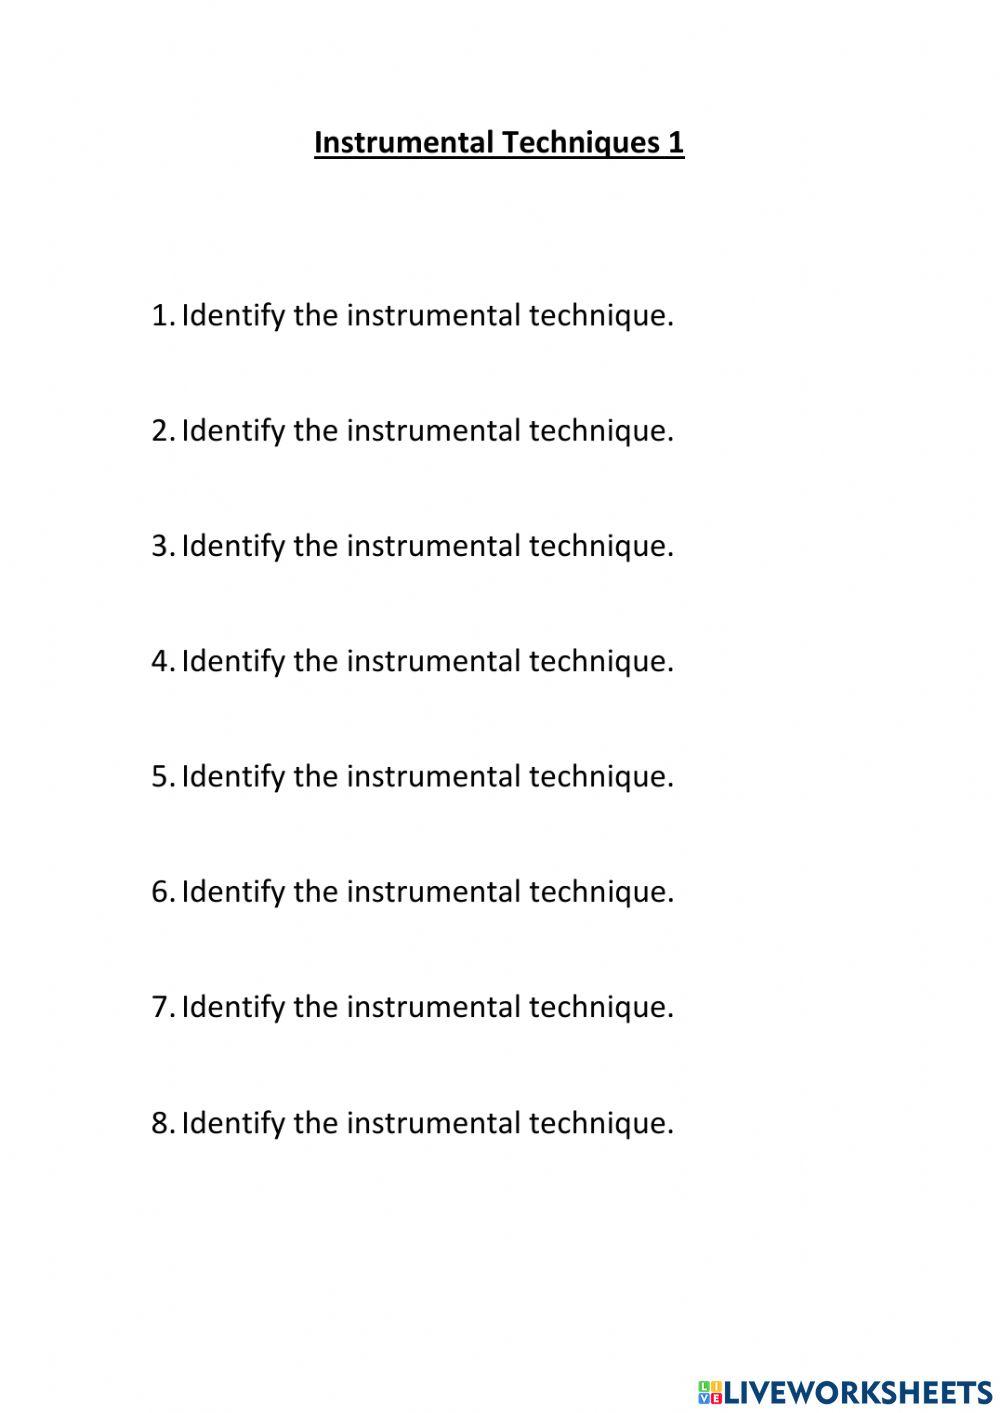 Instrumental Techniques 1